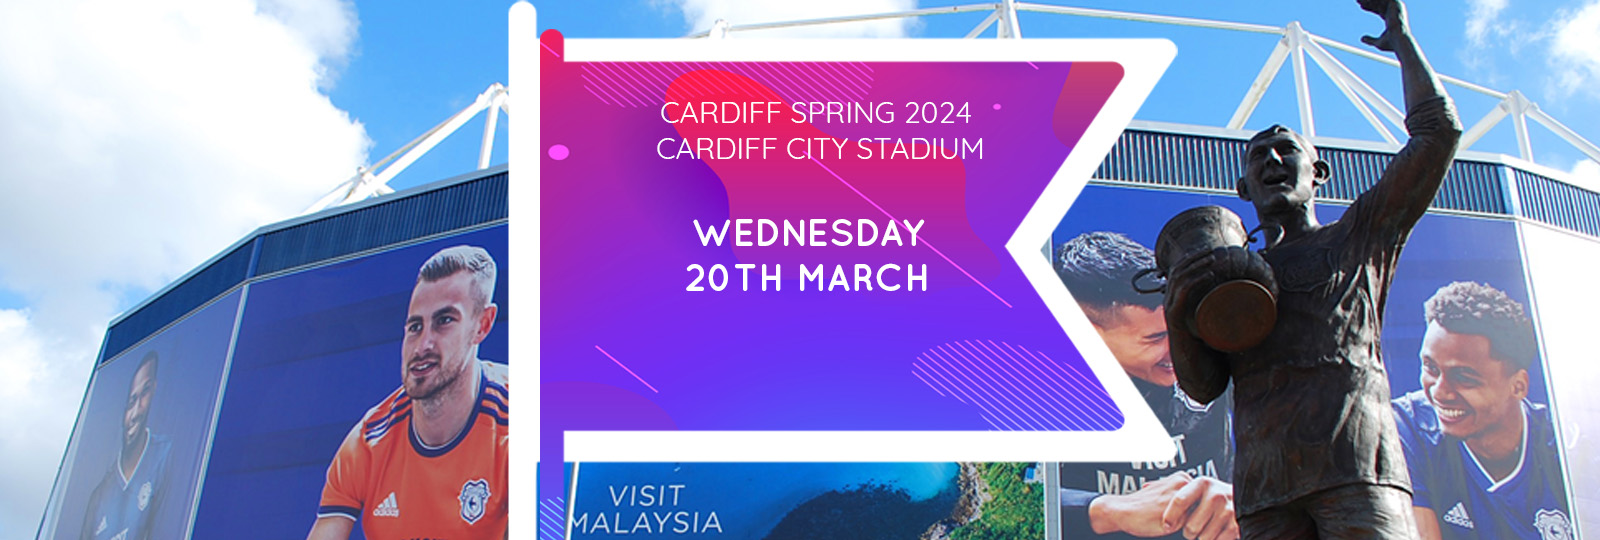 Cardiff Spring 2024 Fair